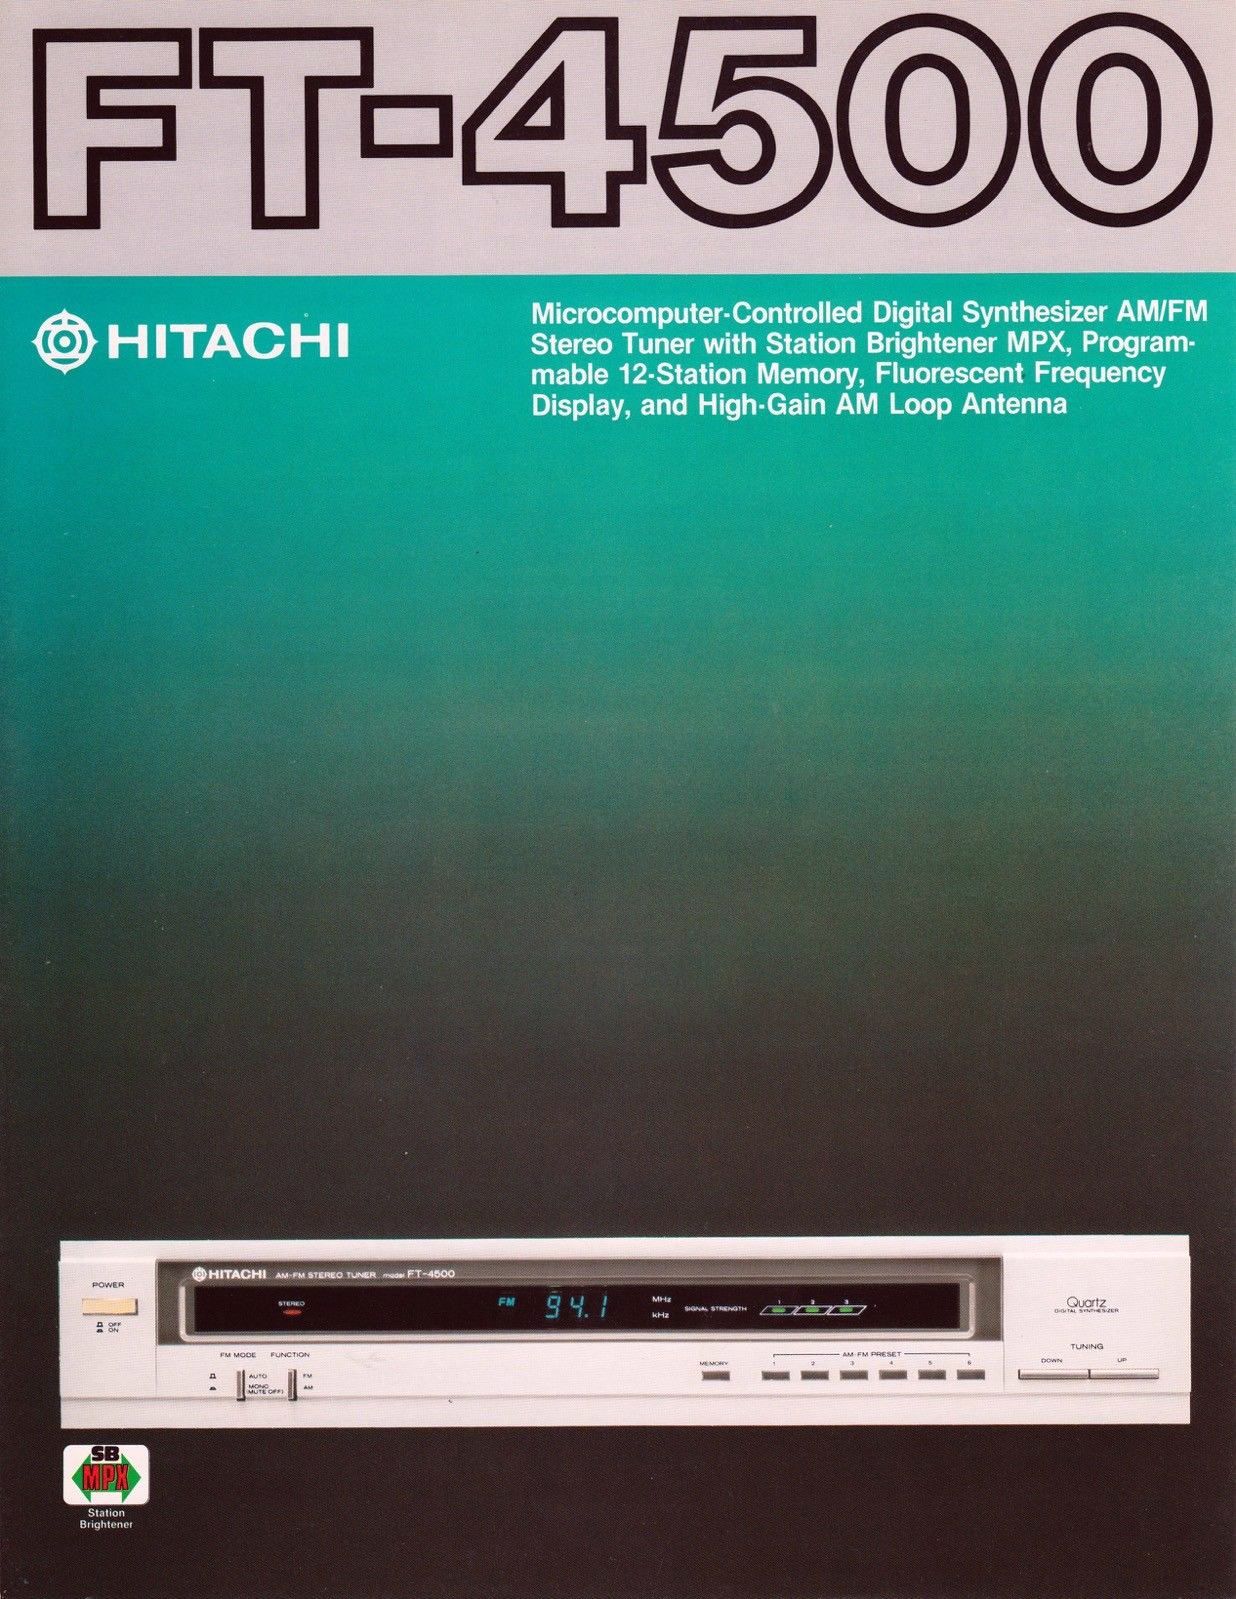 Hitachi FT-4500-Prospekt-1.jpg